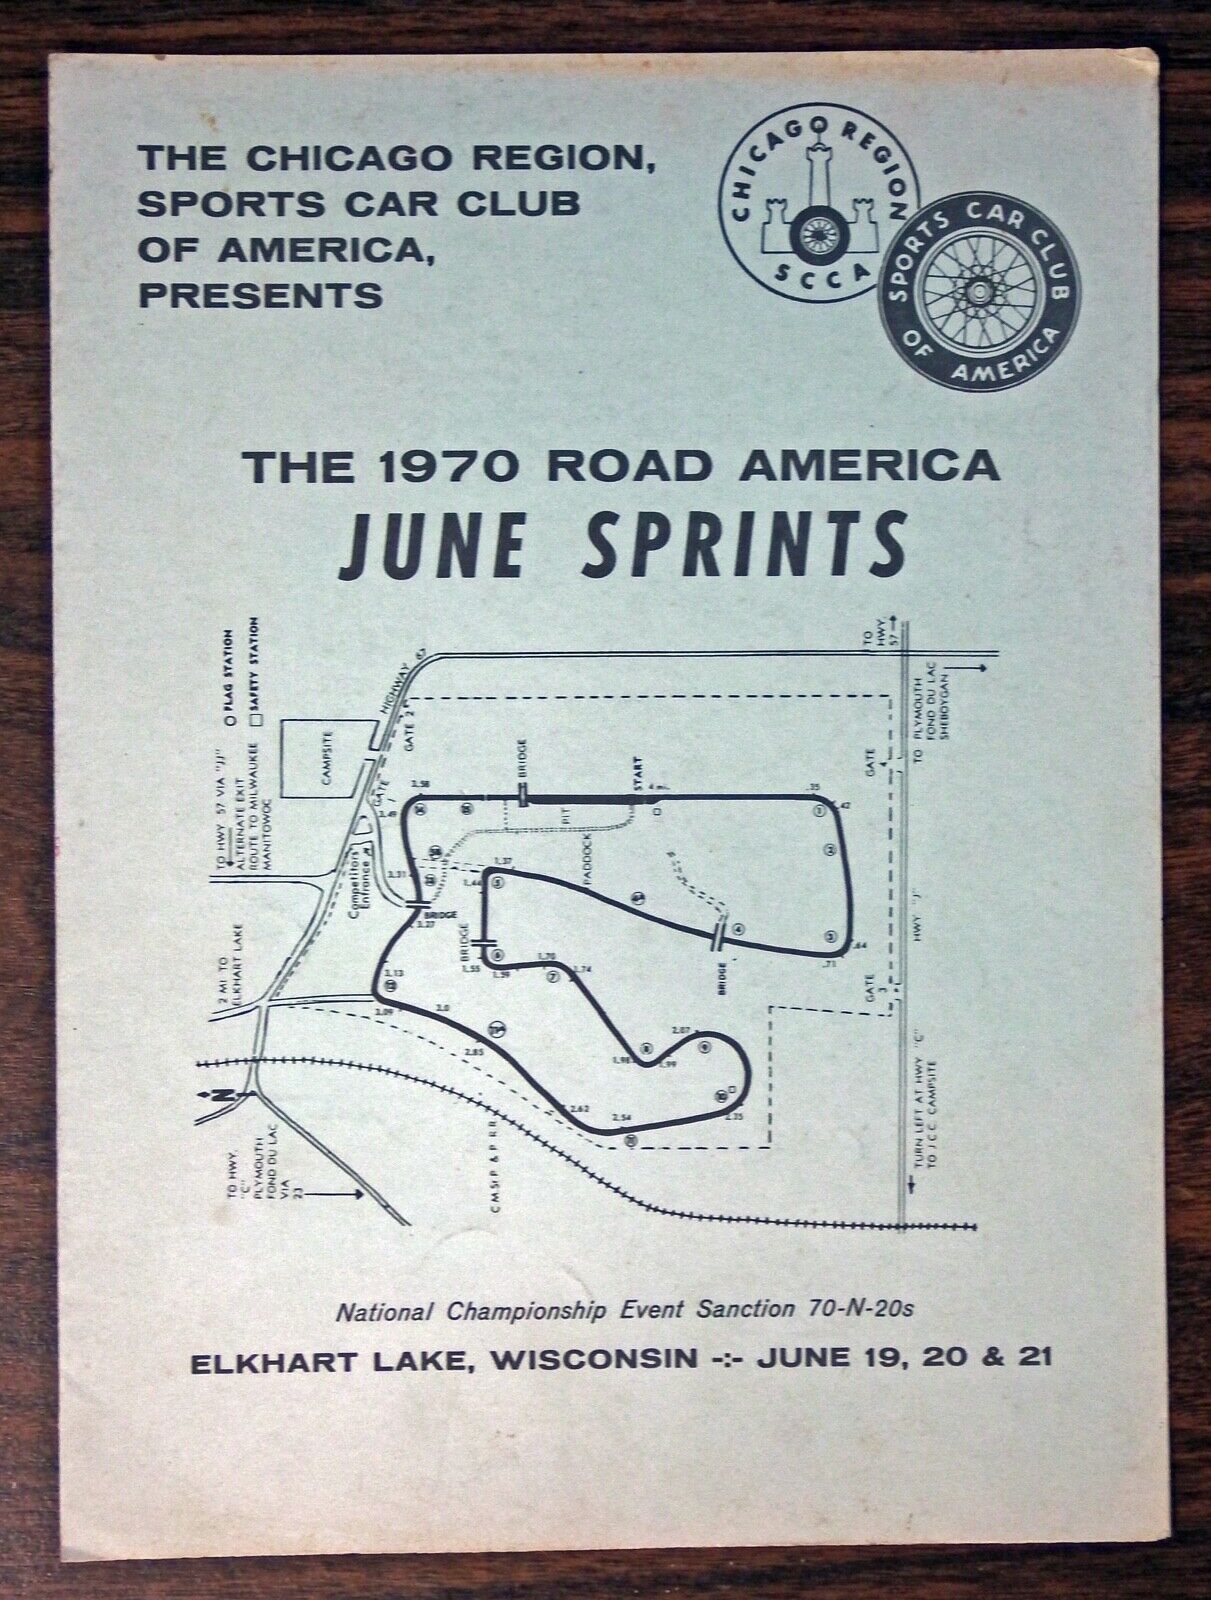 1970 ROAD AMERICA JUNE SPRINTS - List of Entrants: Bob Tullius; John Greenwood